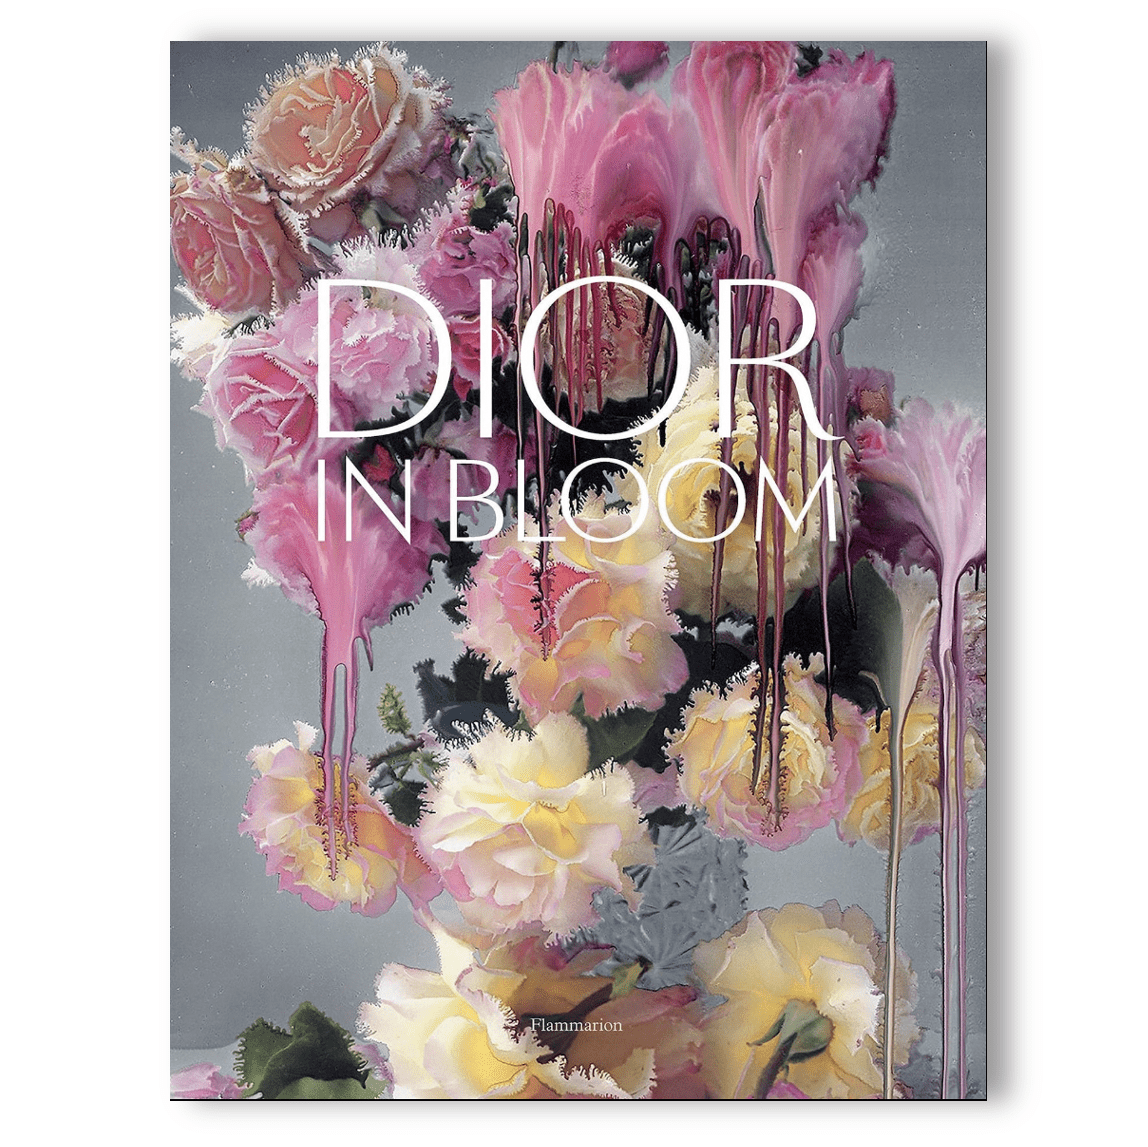 Hintsdeco Books Βιβλίο Τέχνης Βιβλίο Τέχνης, Fashion, Dior in Bloom, Ρόζ-Γκρί, 27×3,3×35,5 cm, Hintsdeco